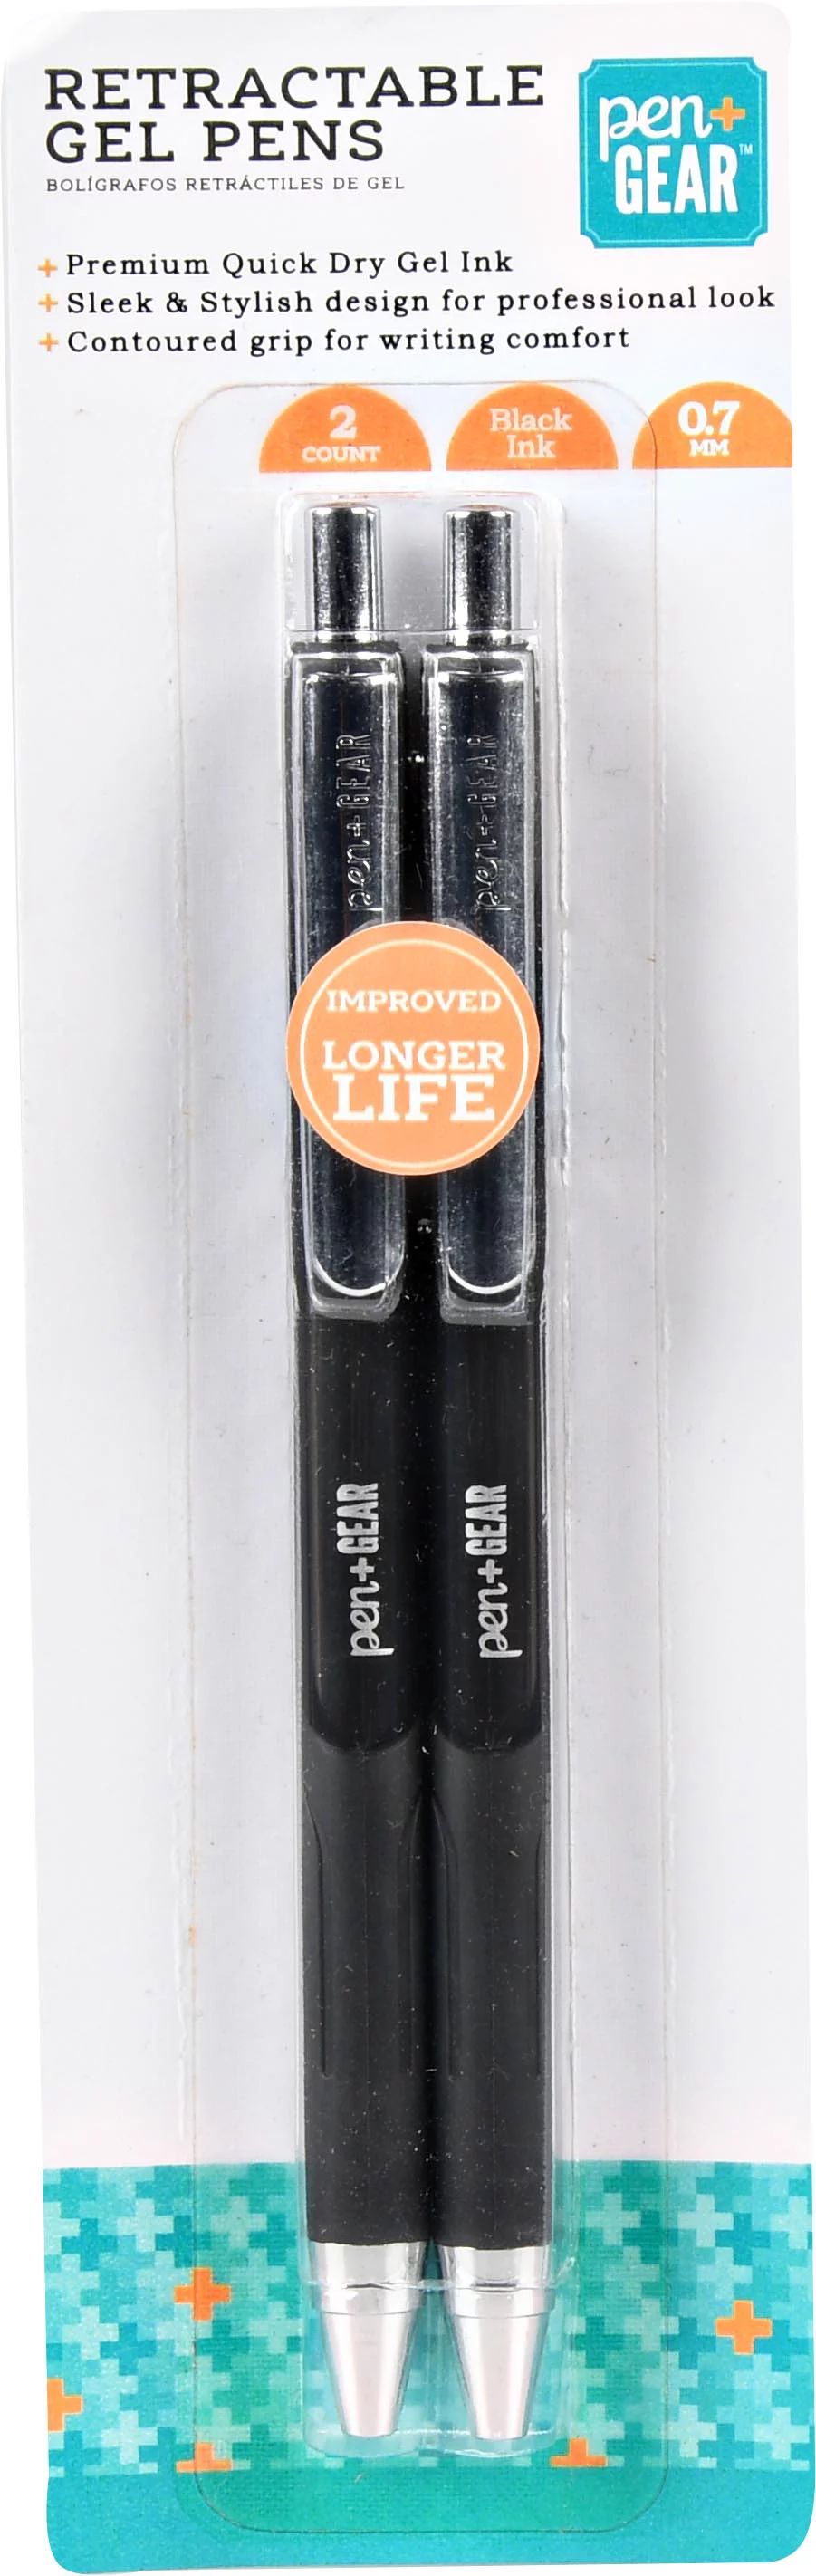 Pen + Gear Retractable Gel Pen, Medium Point, 0.7 mm, Black, 2-Count, 192532 | Walmart (US)